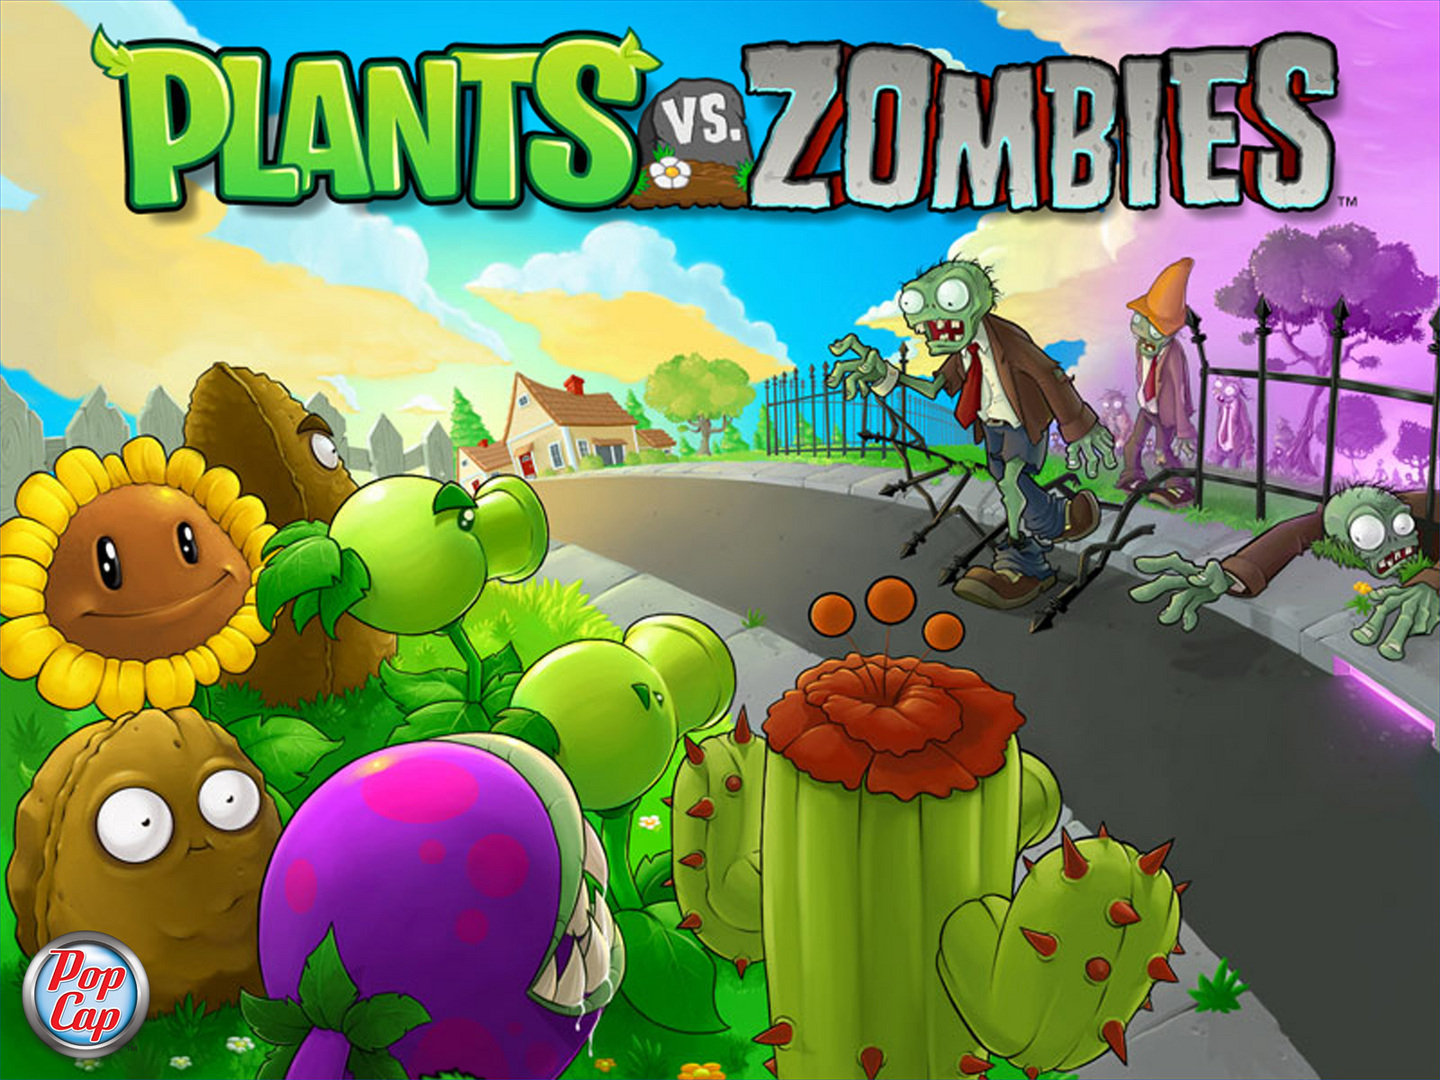 Zombie plant vs Plants vs